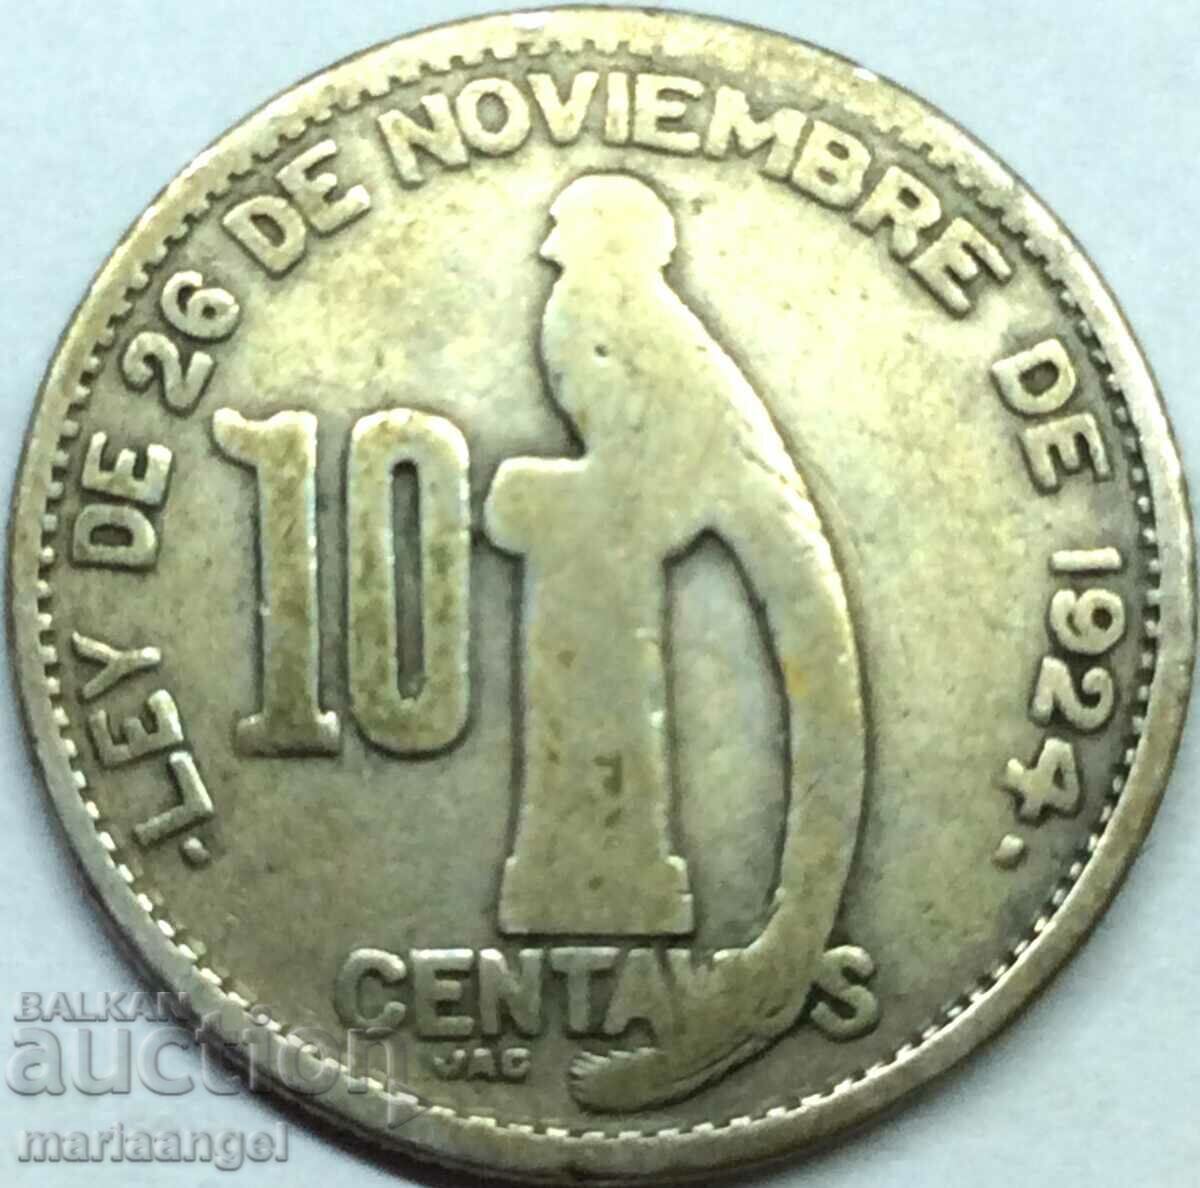 Guatemala 10 centavos 1948 20mm argint